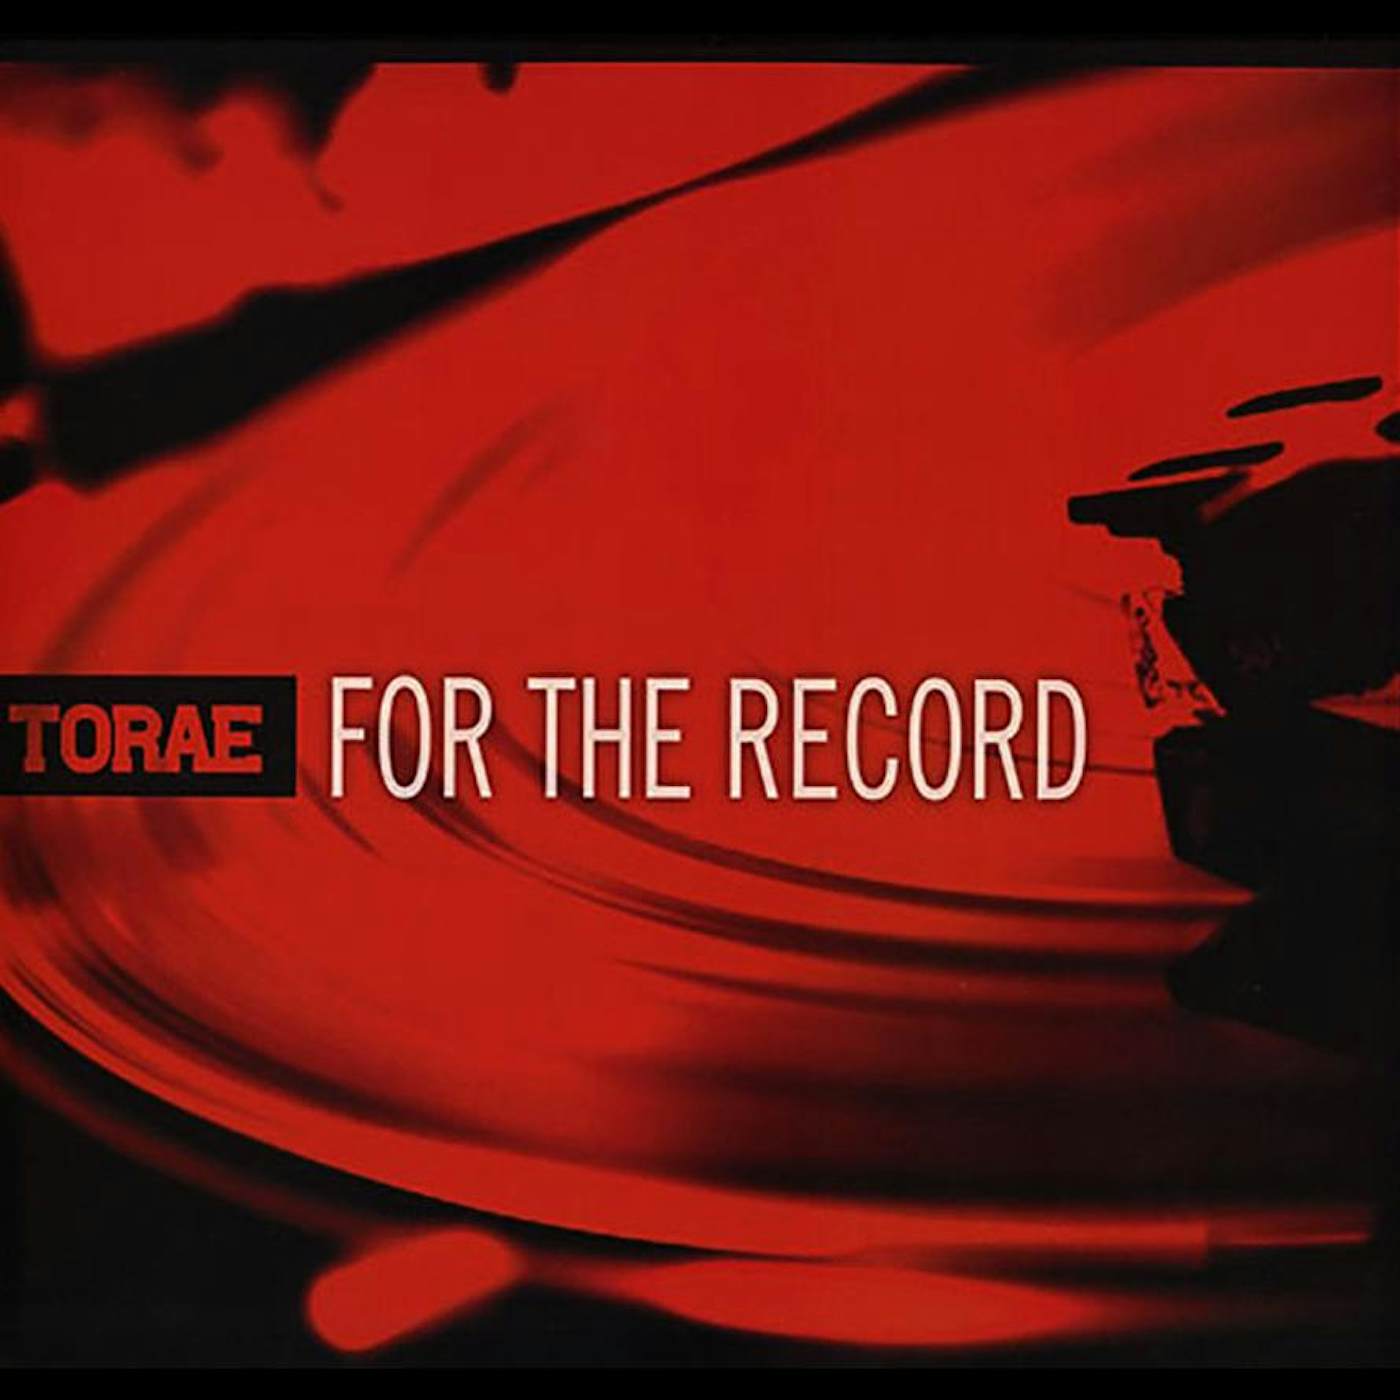 Torae For The Record Vinyl Record